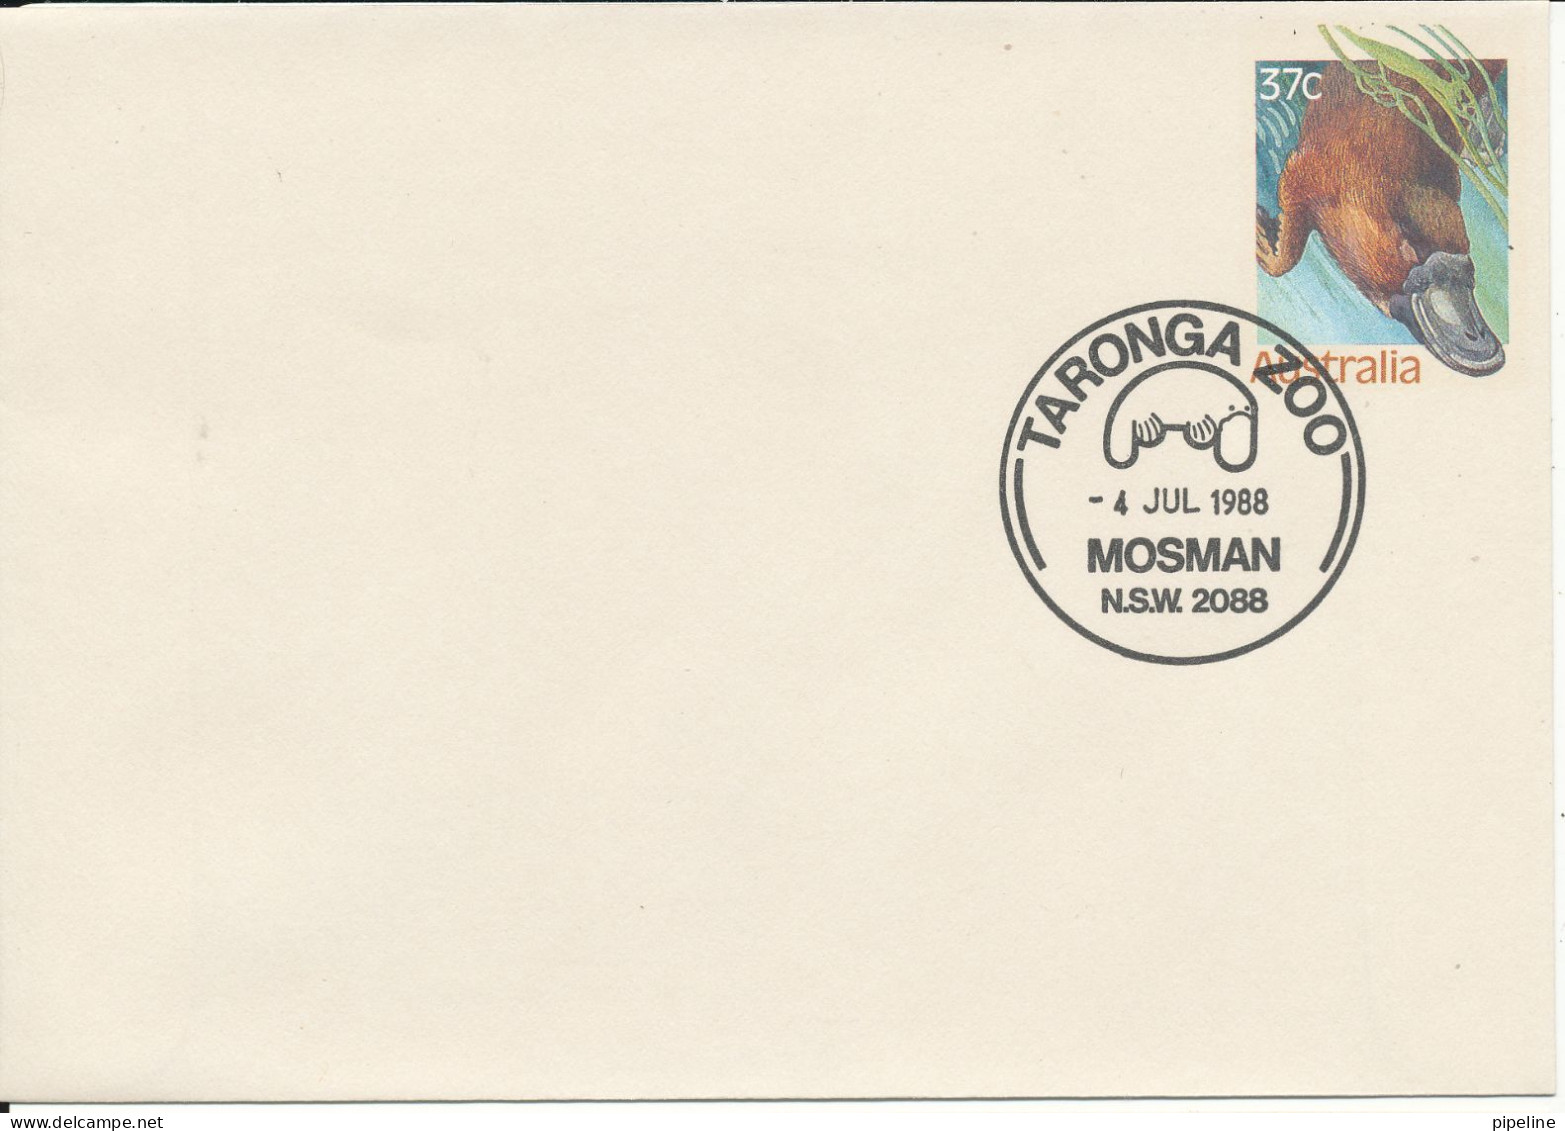 Australia Postal Stationery Cover 100 Anniversary Taronga Zoo Mosman 4-7-1998 With Platypus In The Postmark - Entiers Postaux